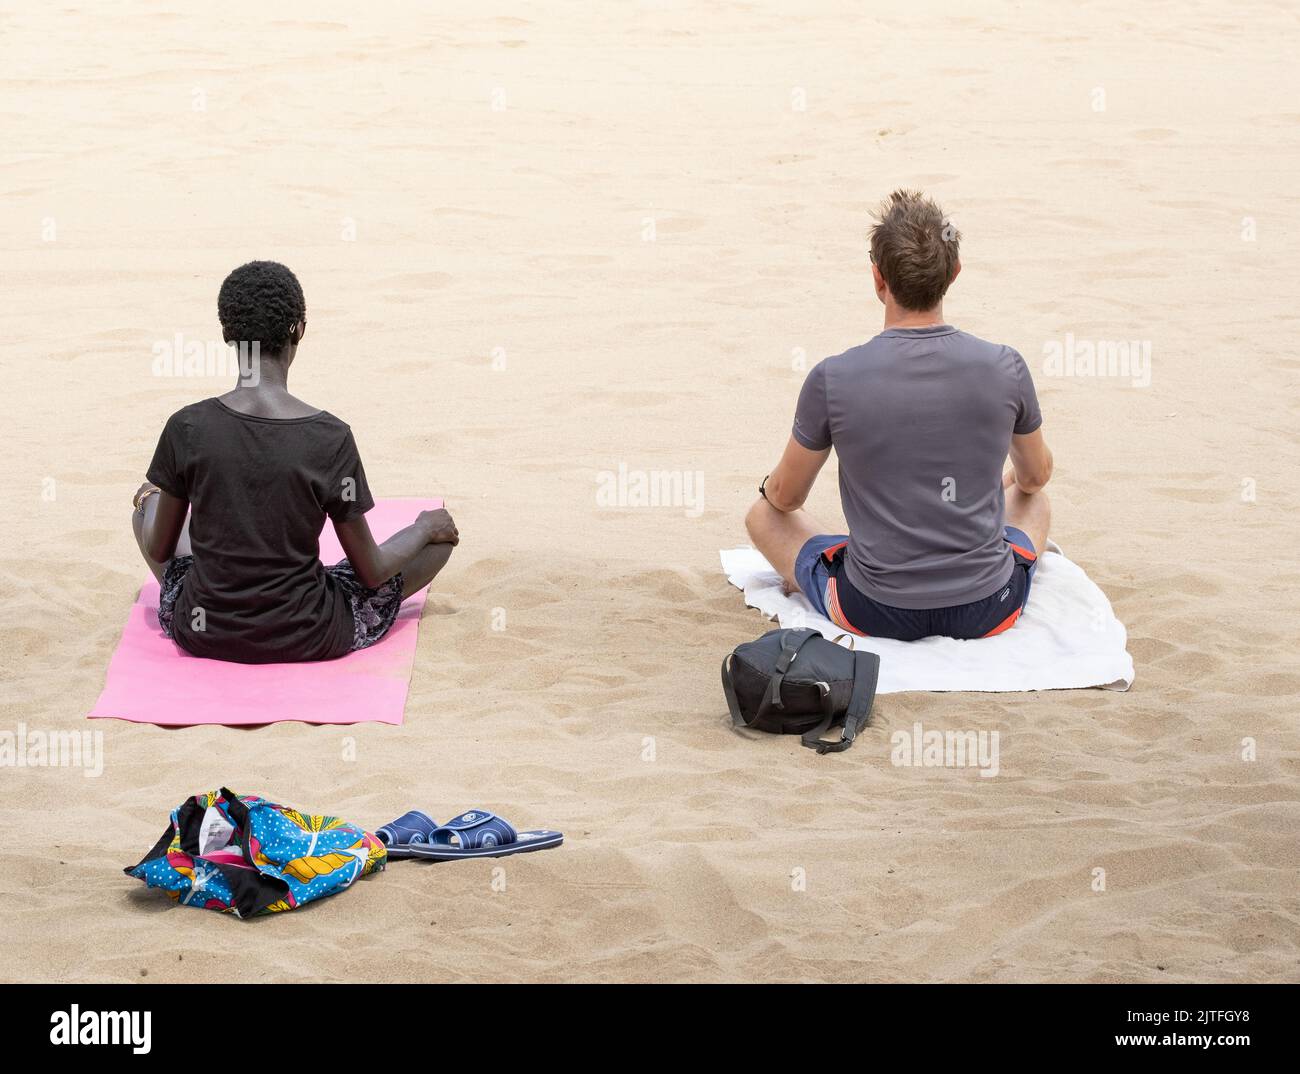 Mixed race couple performing yoga, meditation on beach. Stock Photo